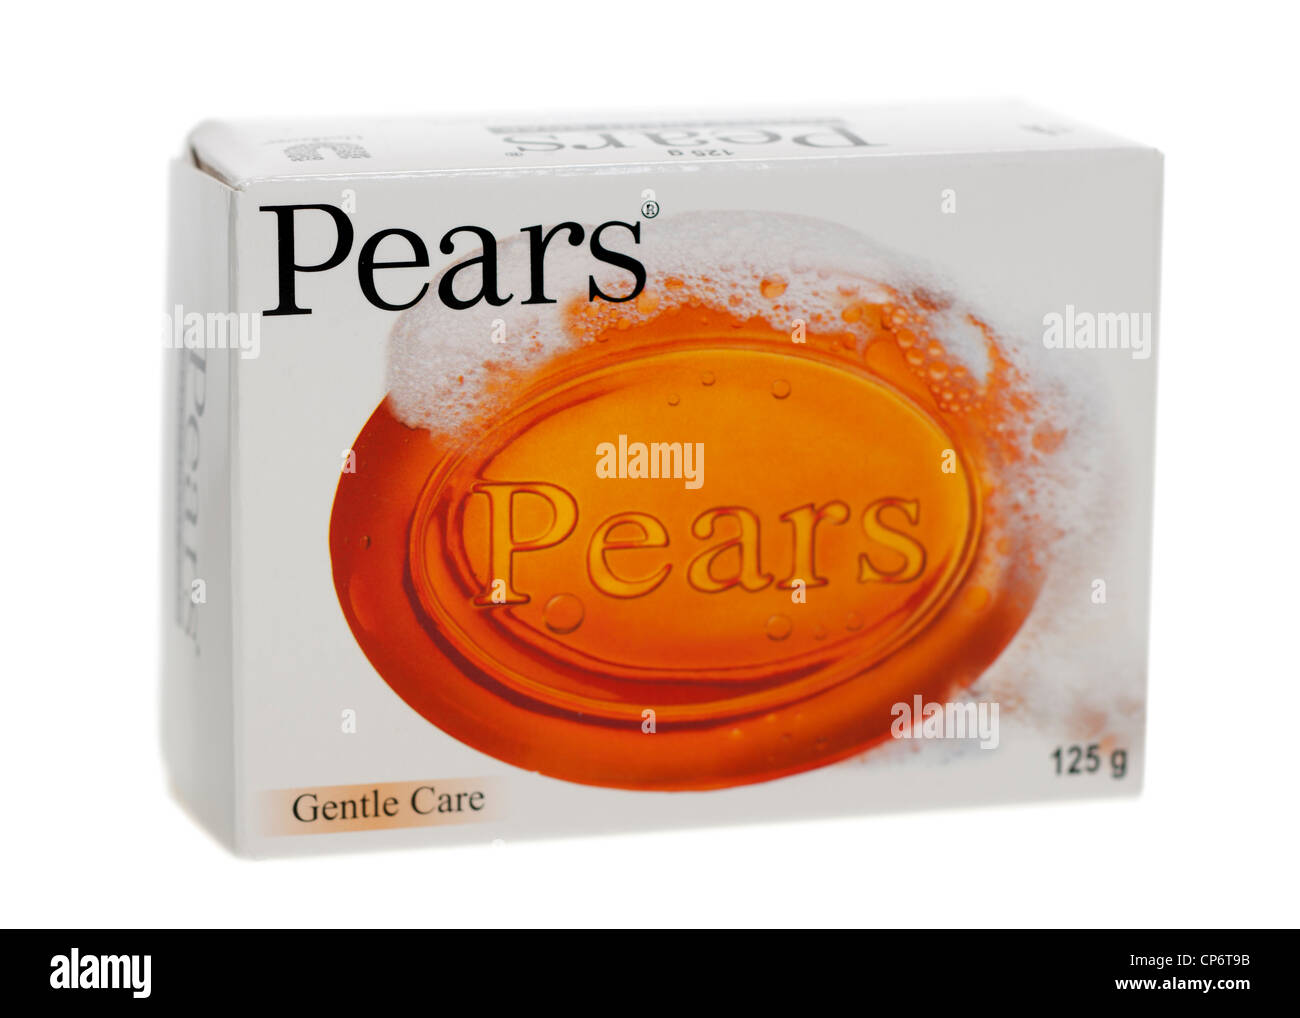 Pears soap Stock Photo